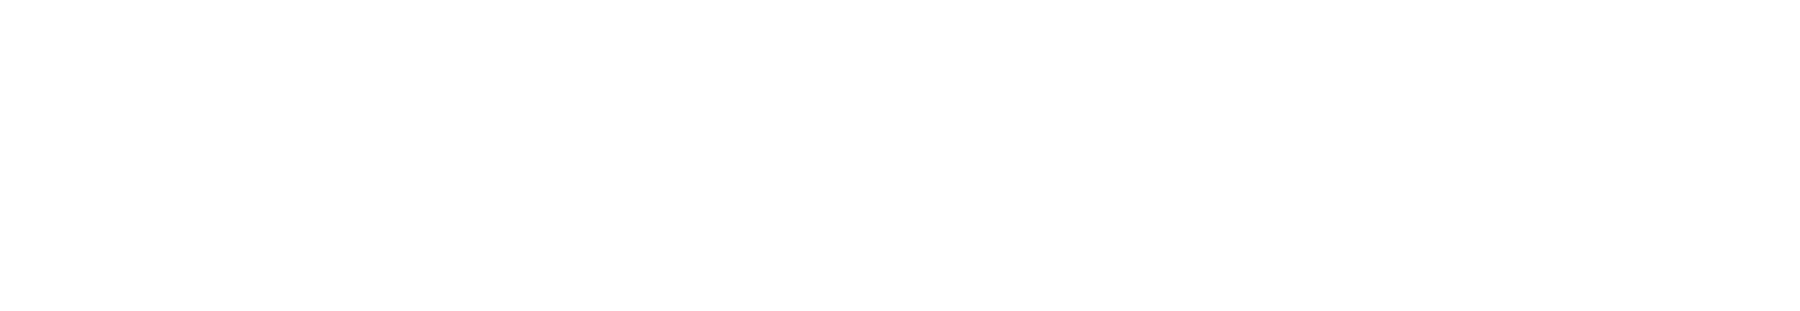 Providore Logo White